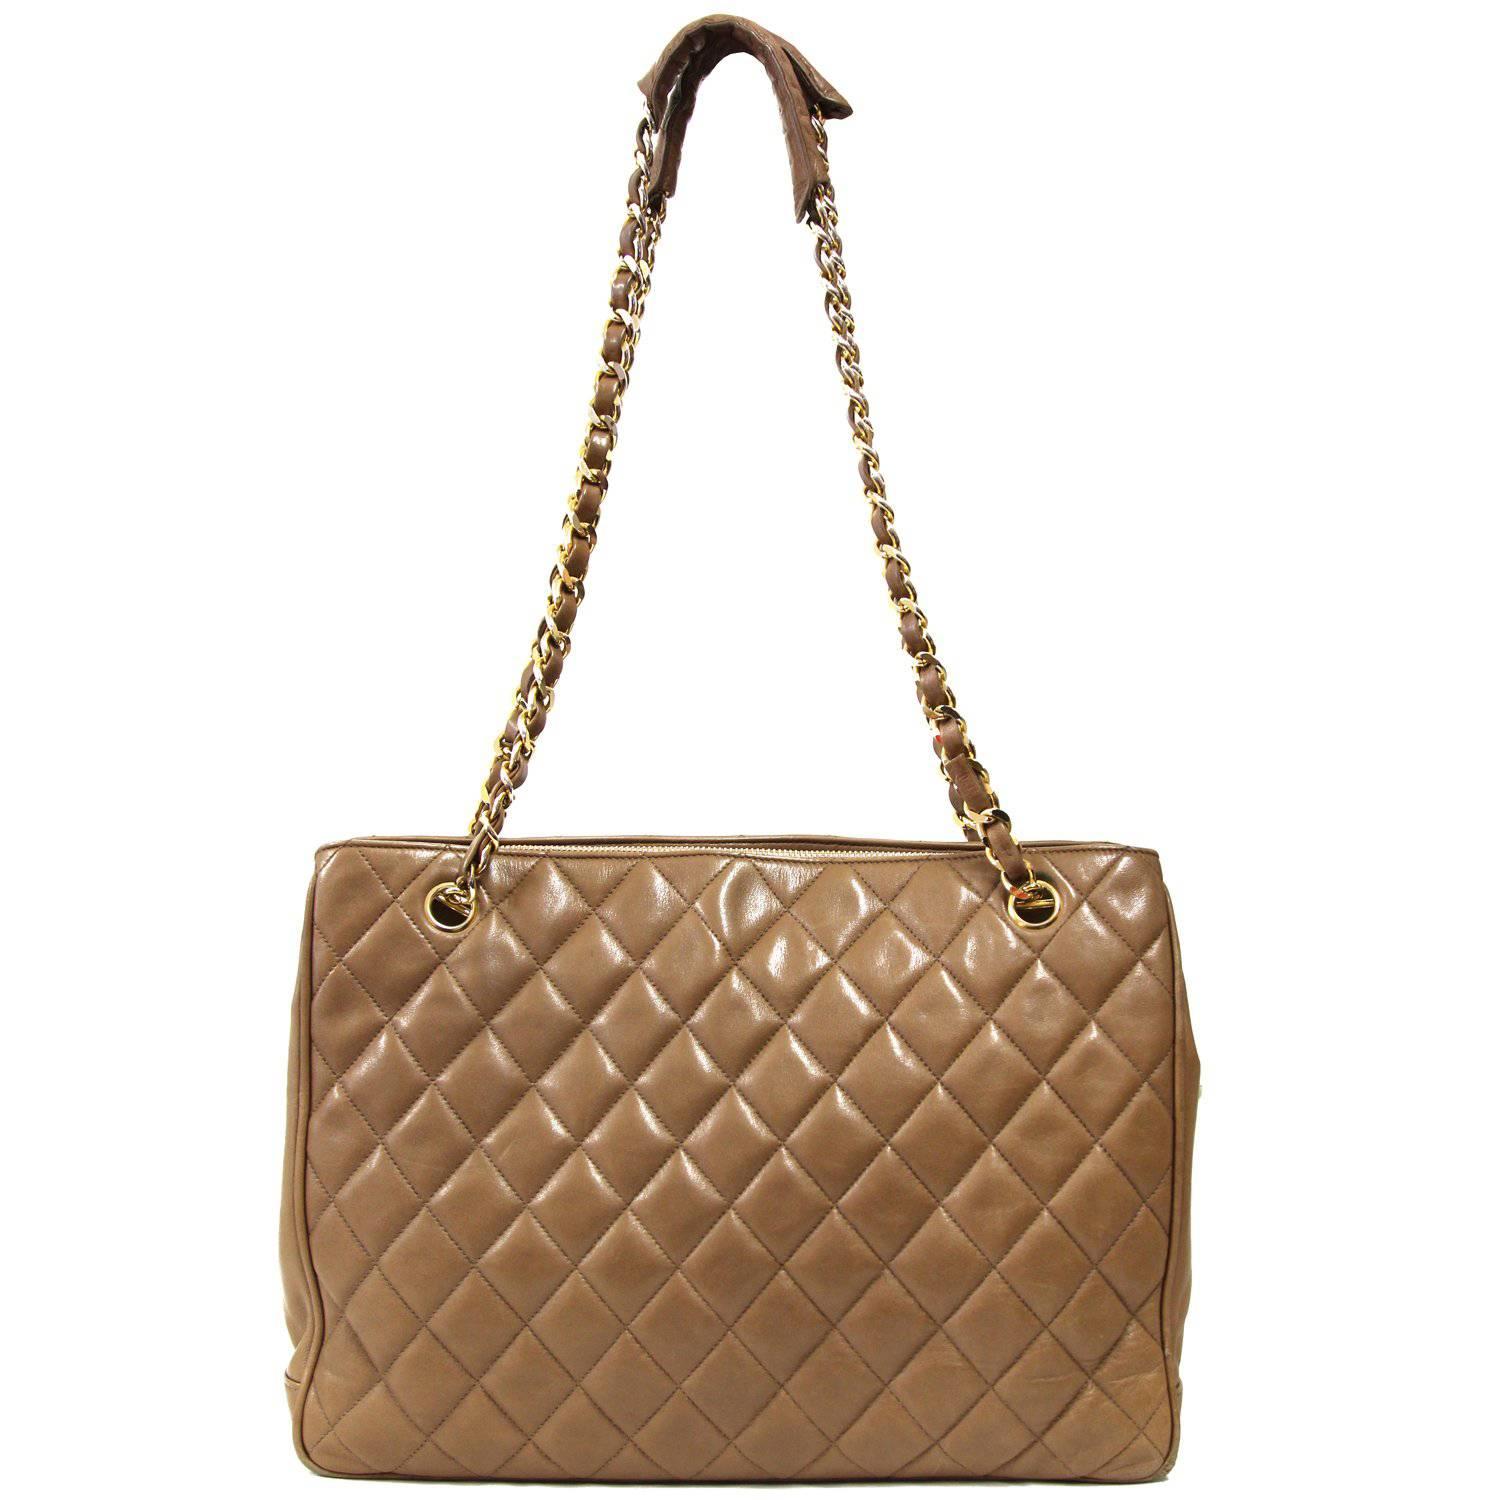 1990s Chanel Brown Leather Matelassé Bag